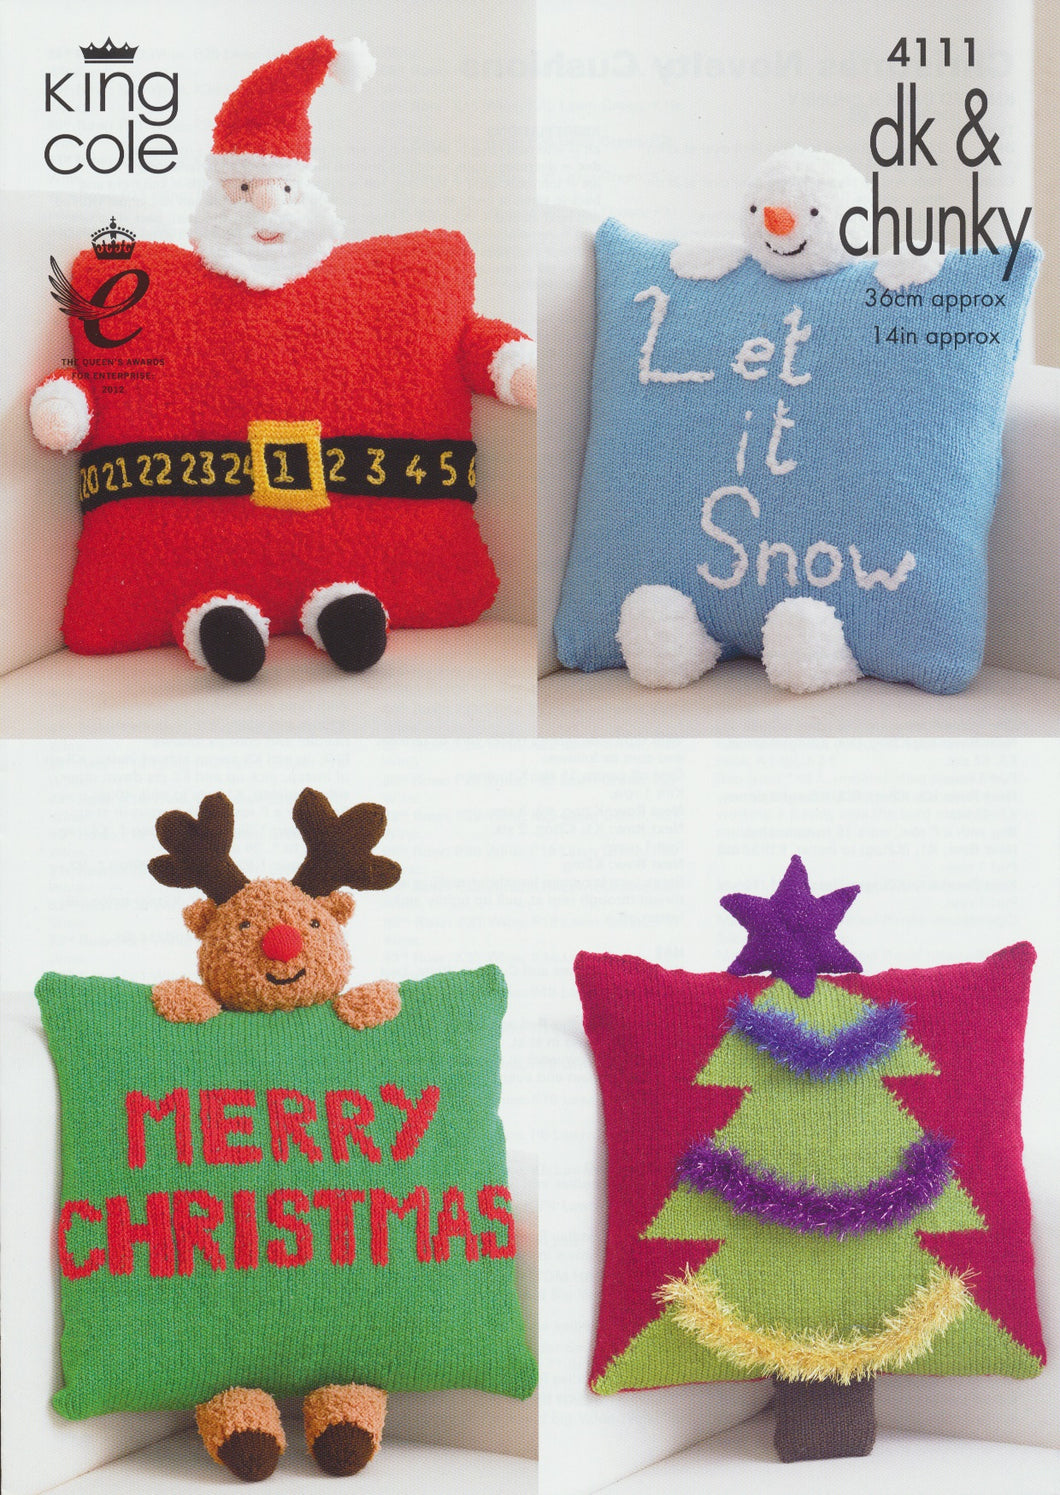 King Cole DK & Chunky Christmas Cushion Knitting Pattern 4111